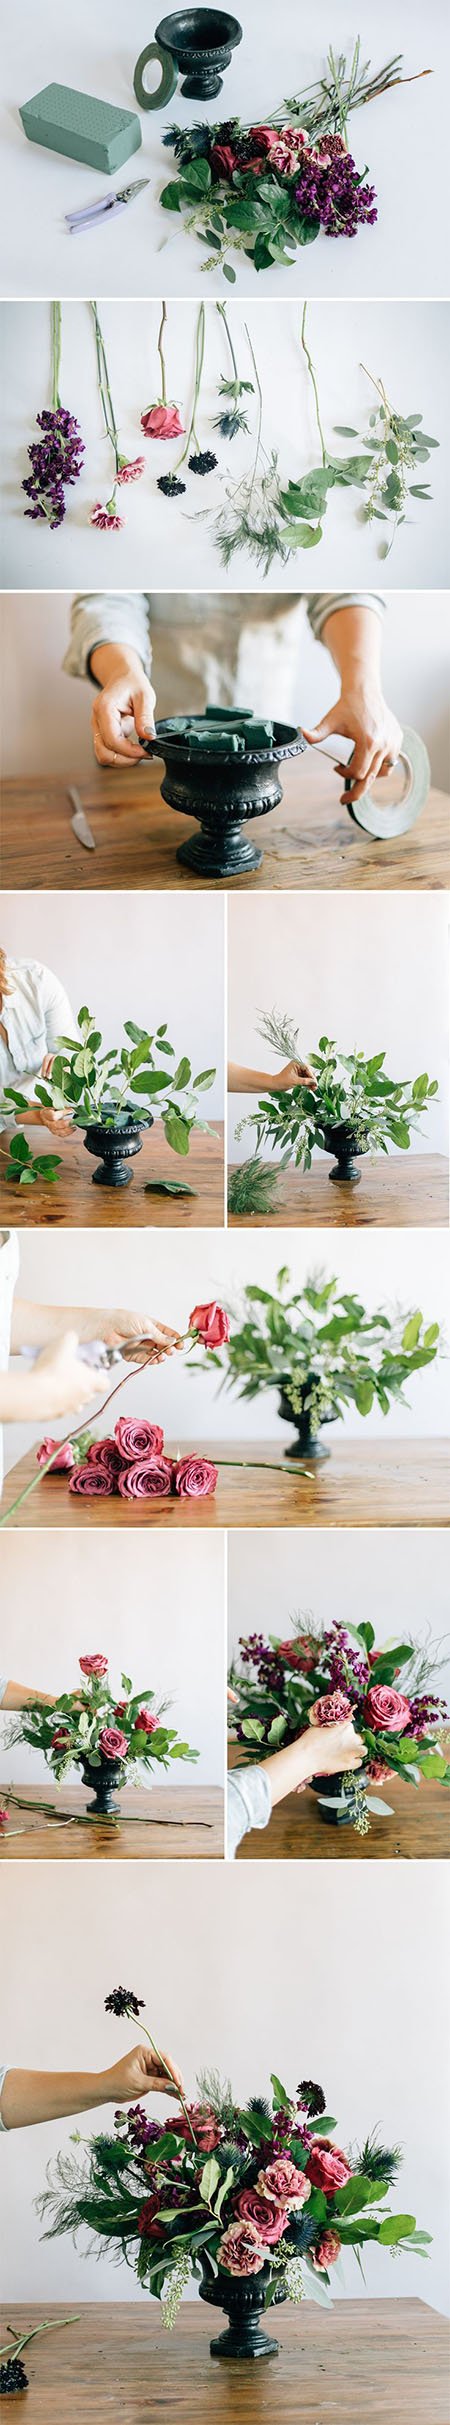 6 DIY a Floral Urn Centerpiece57a9302c